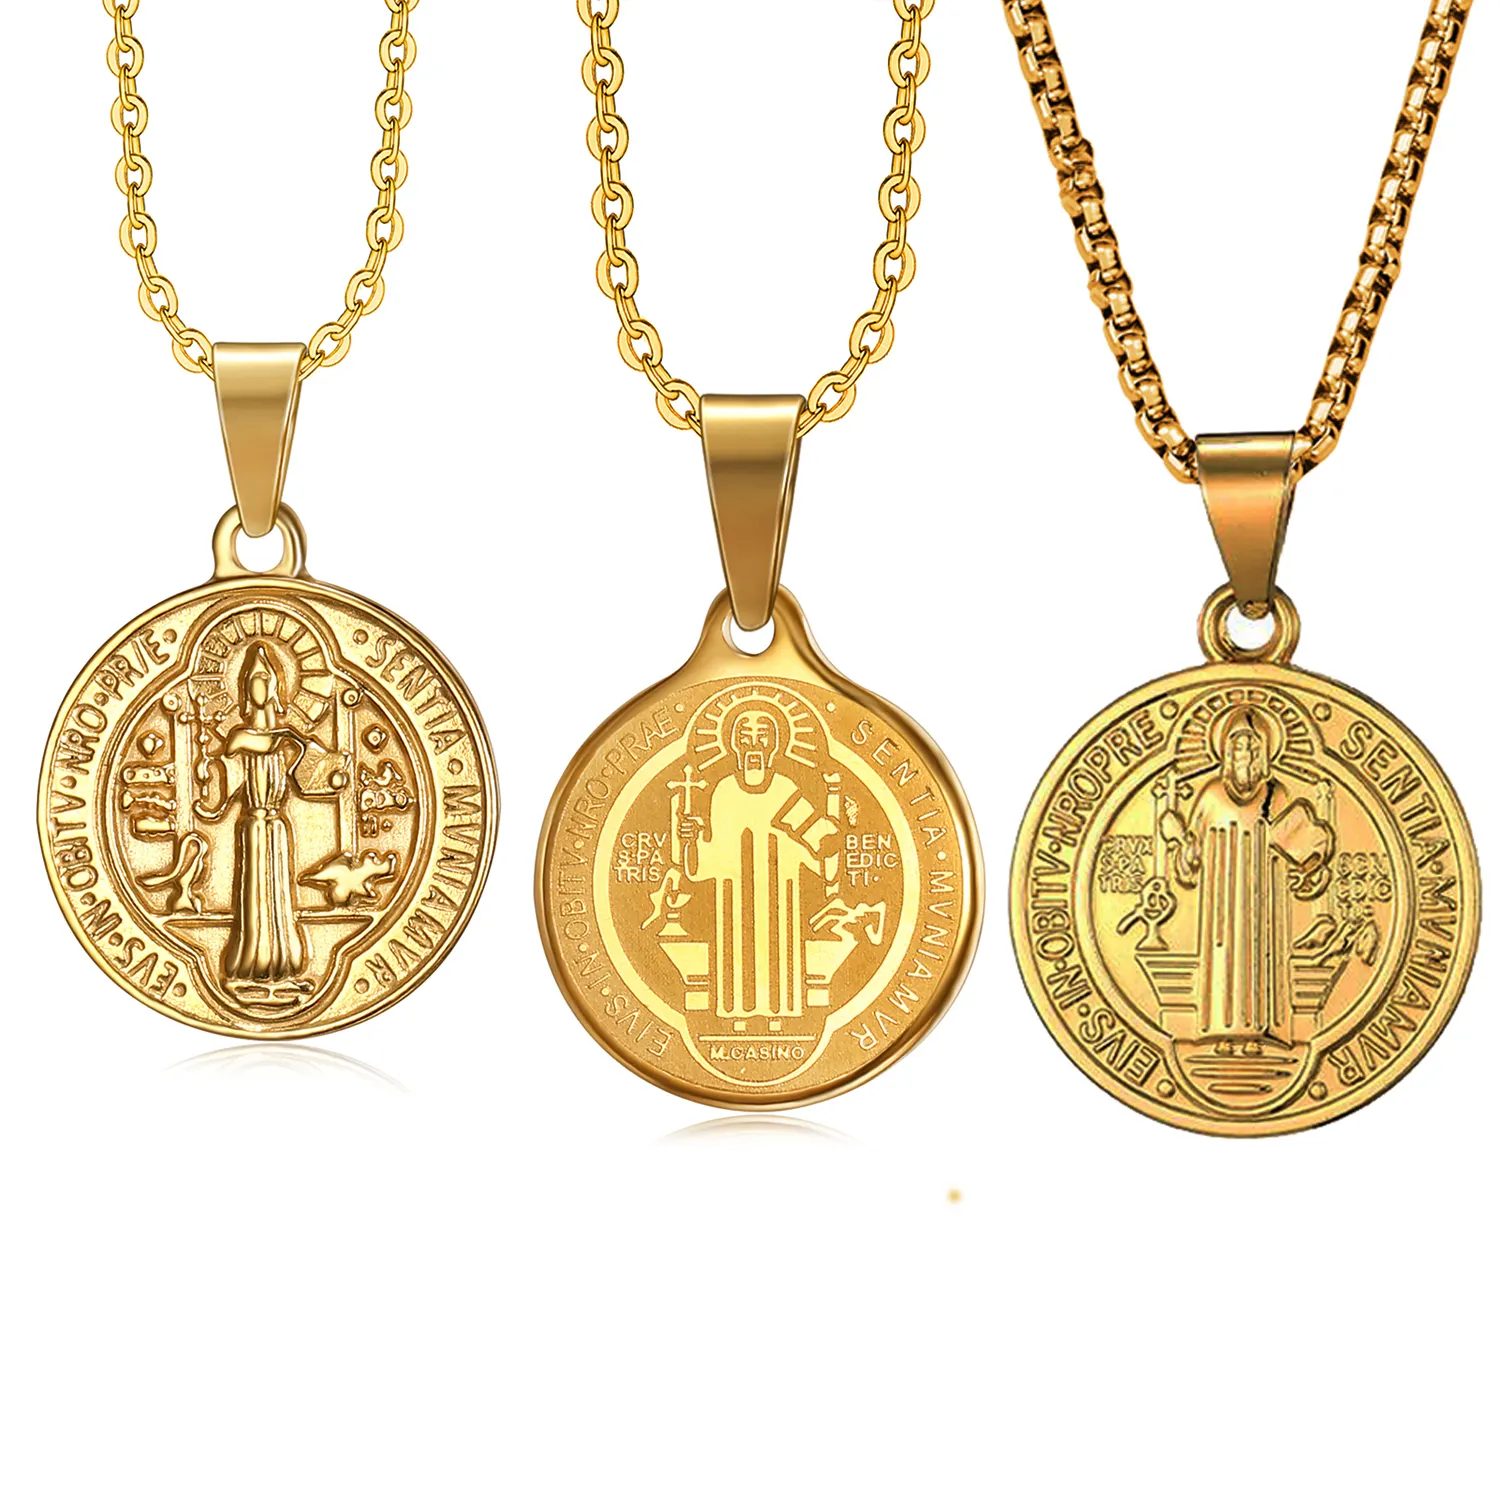 18K oro San Benito medalla collar de acero inoxidable cristiano Cruz católica diseño collar protección joyería para hombres mujeres